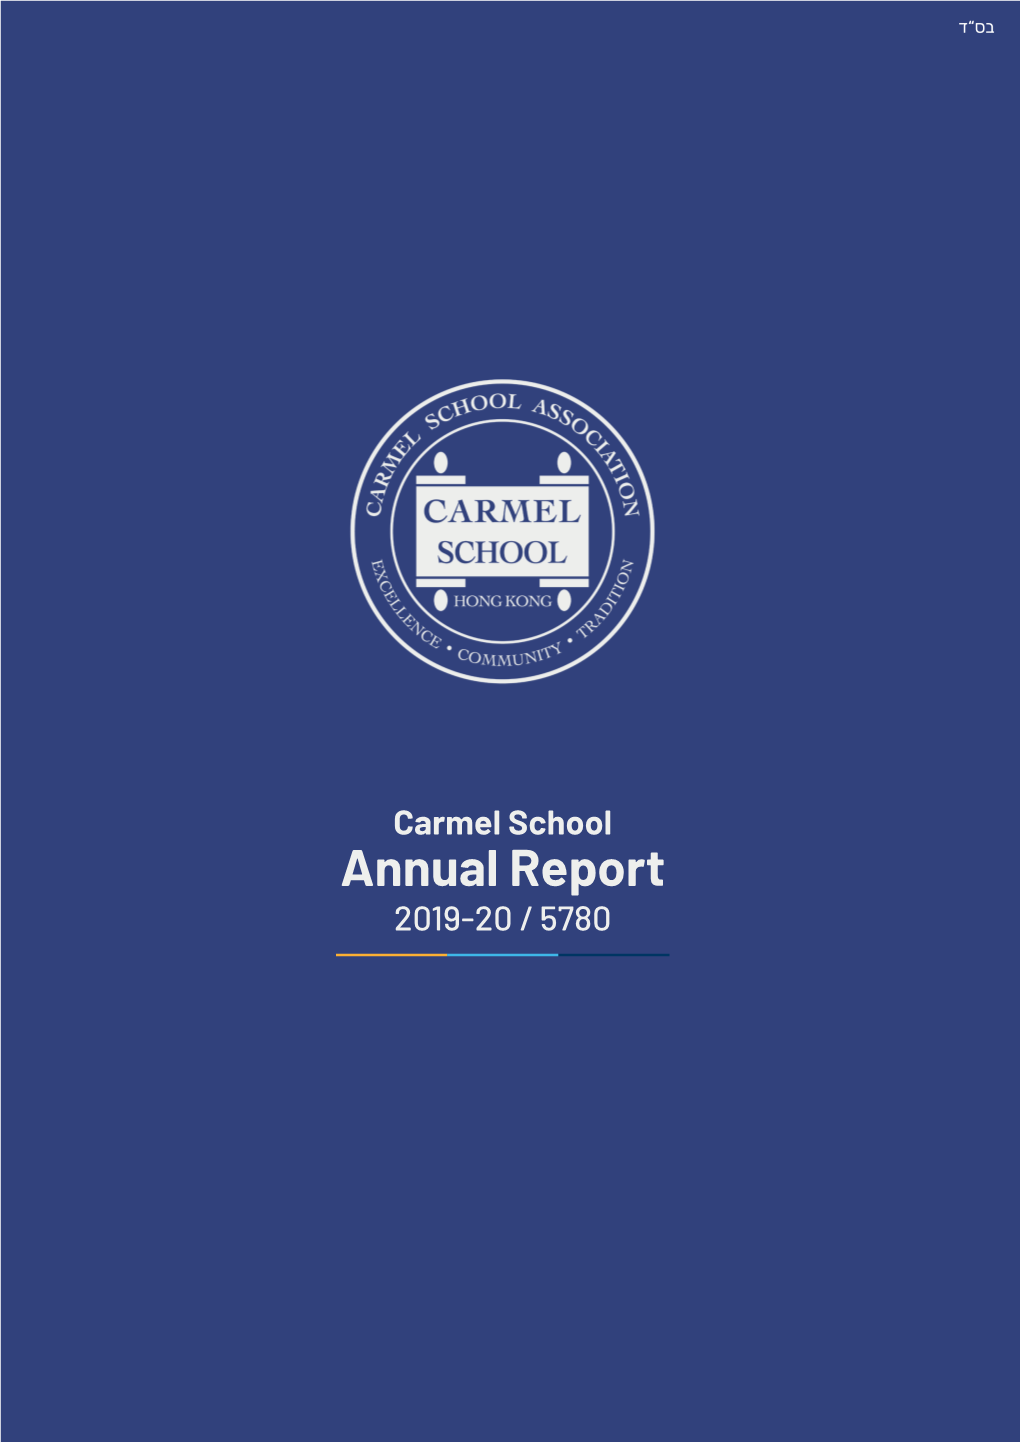 Annual Report 2019-20 / 5780 Contents Carmel School Board Chair's Report 1 Principal's Report 2 Head of Elementary Report 4 Financial Report 6 PTA Report 8